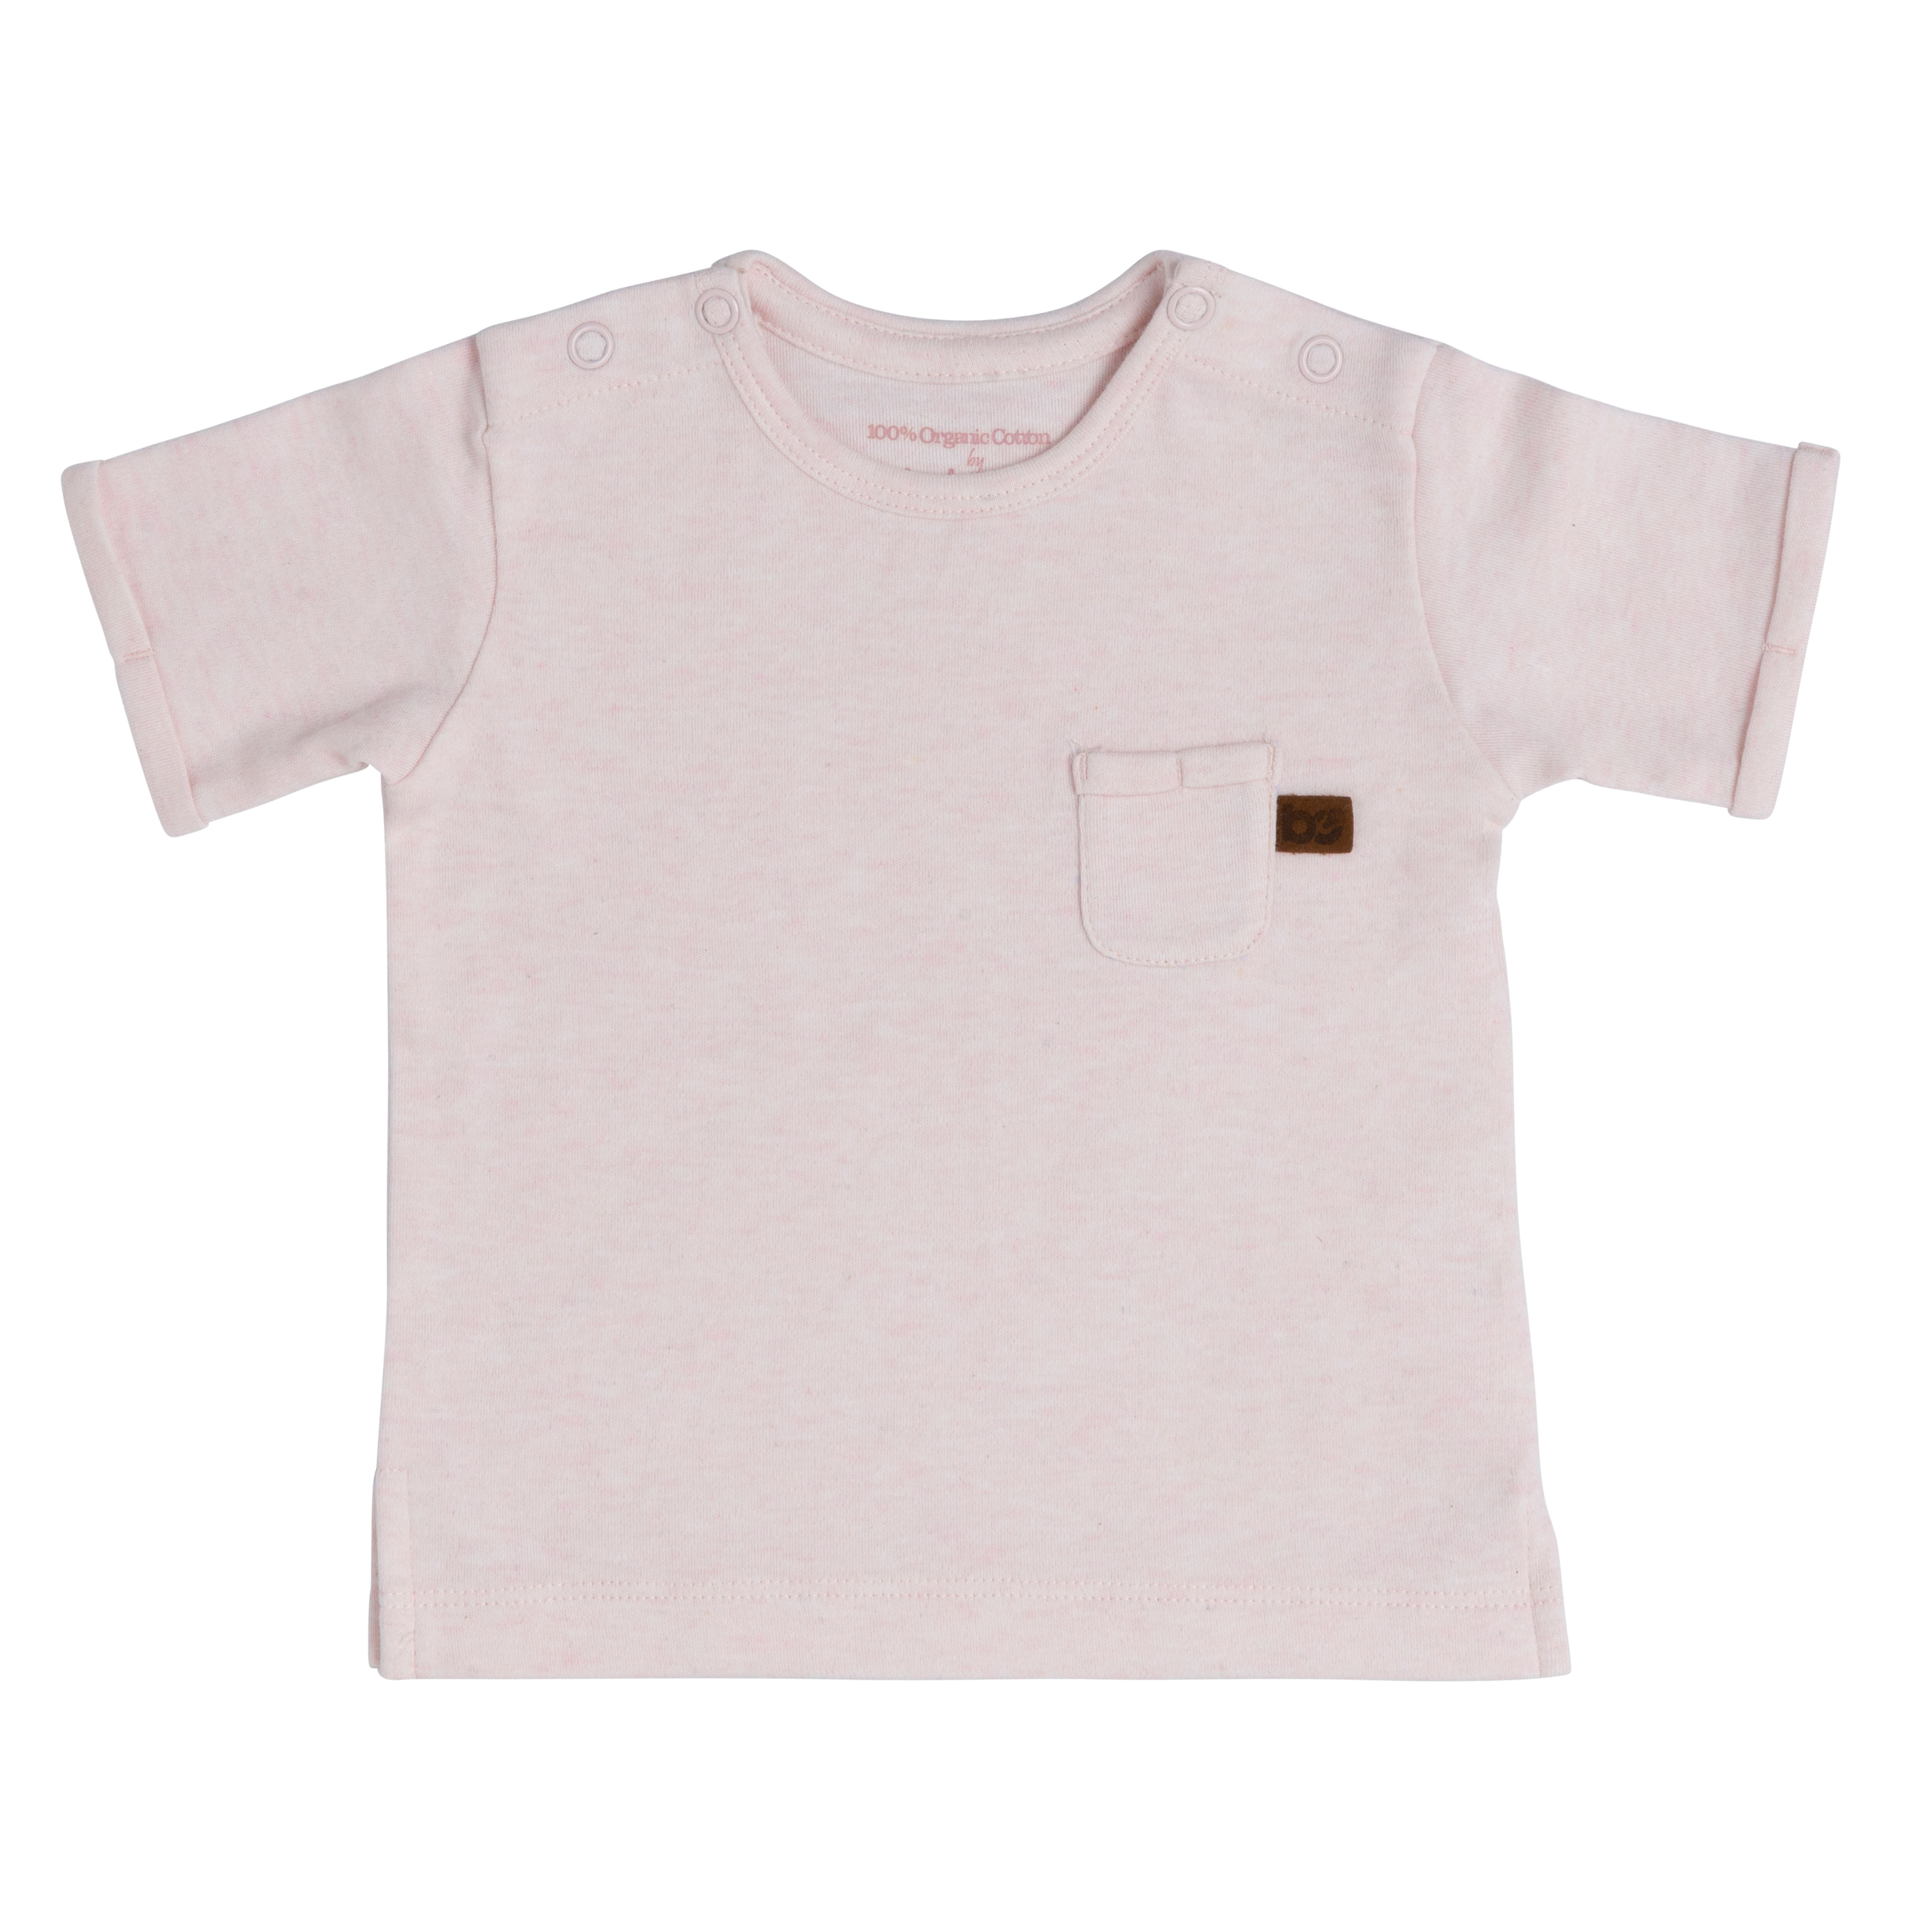 T-shirt Melange rose très clair - 50